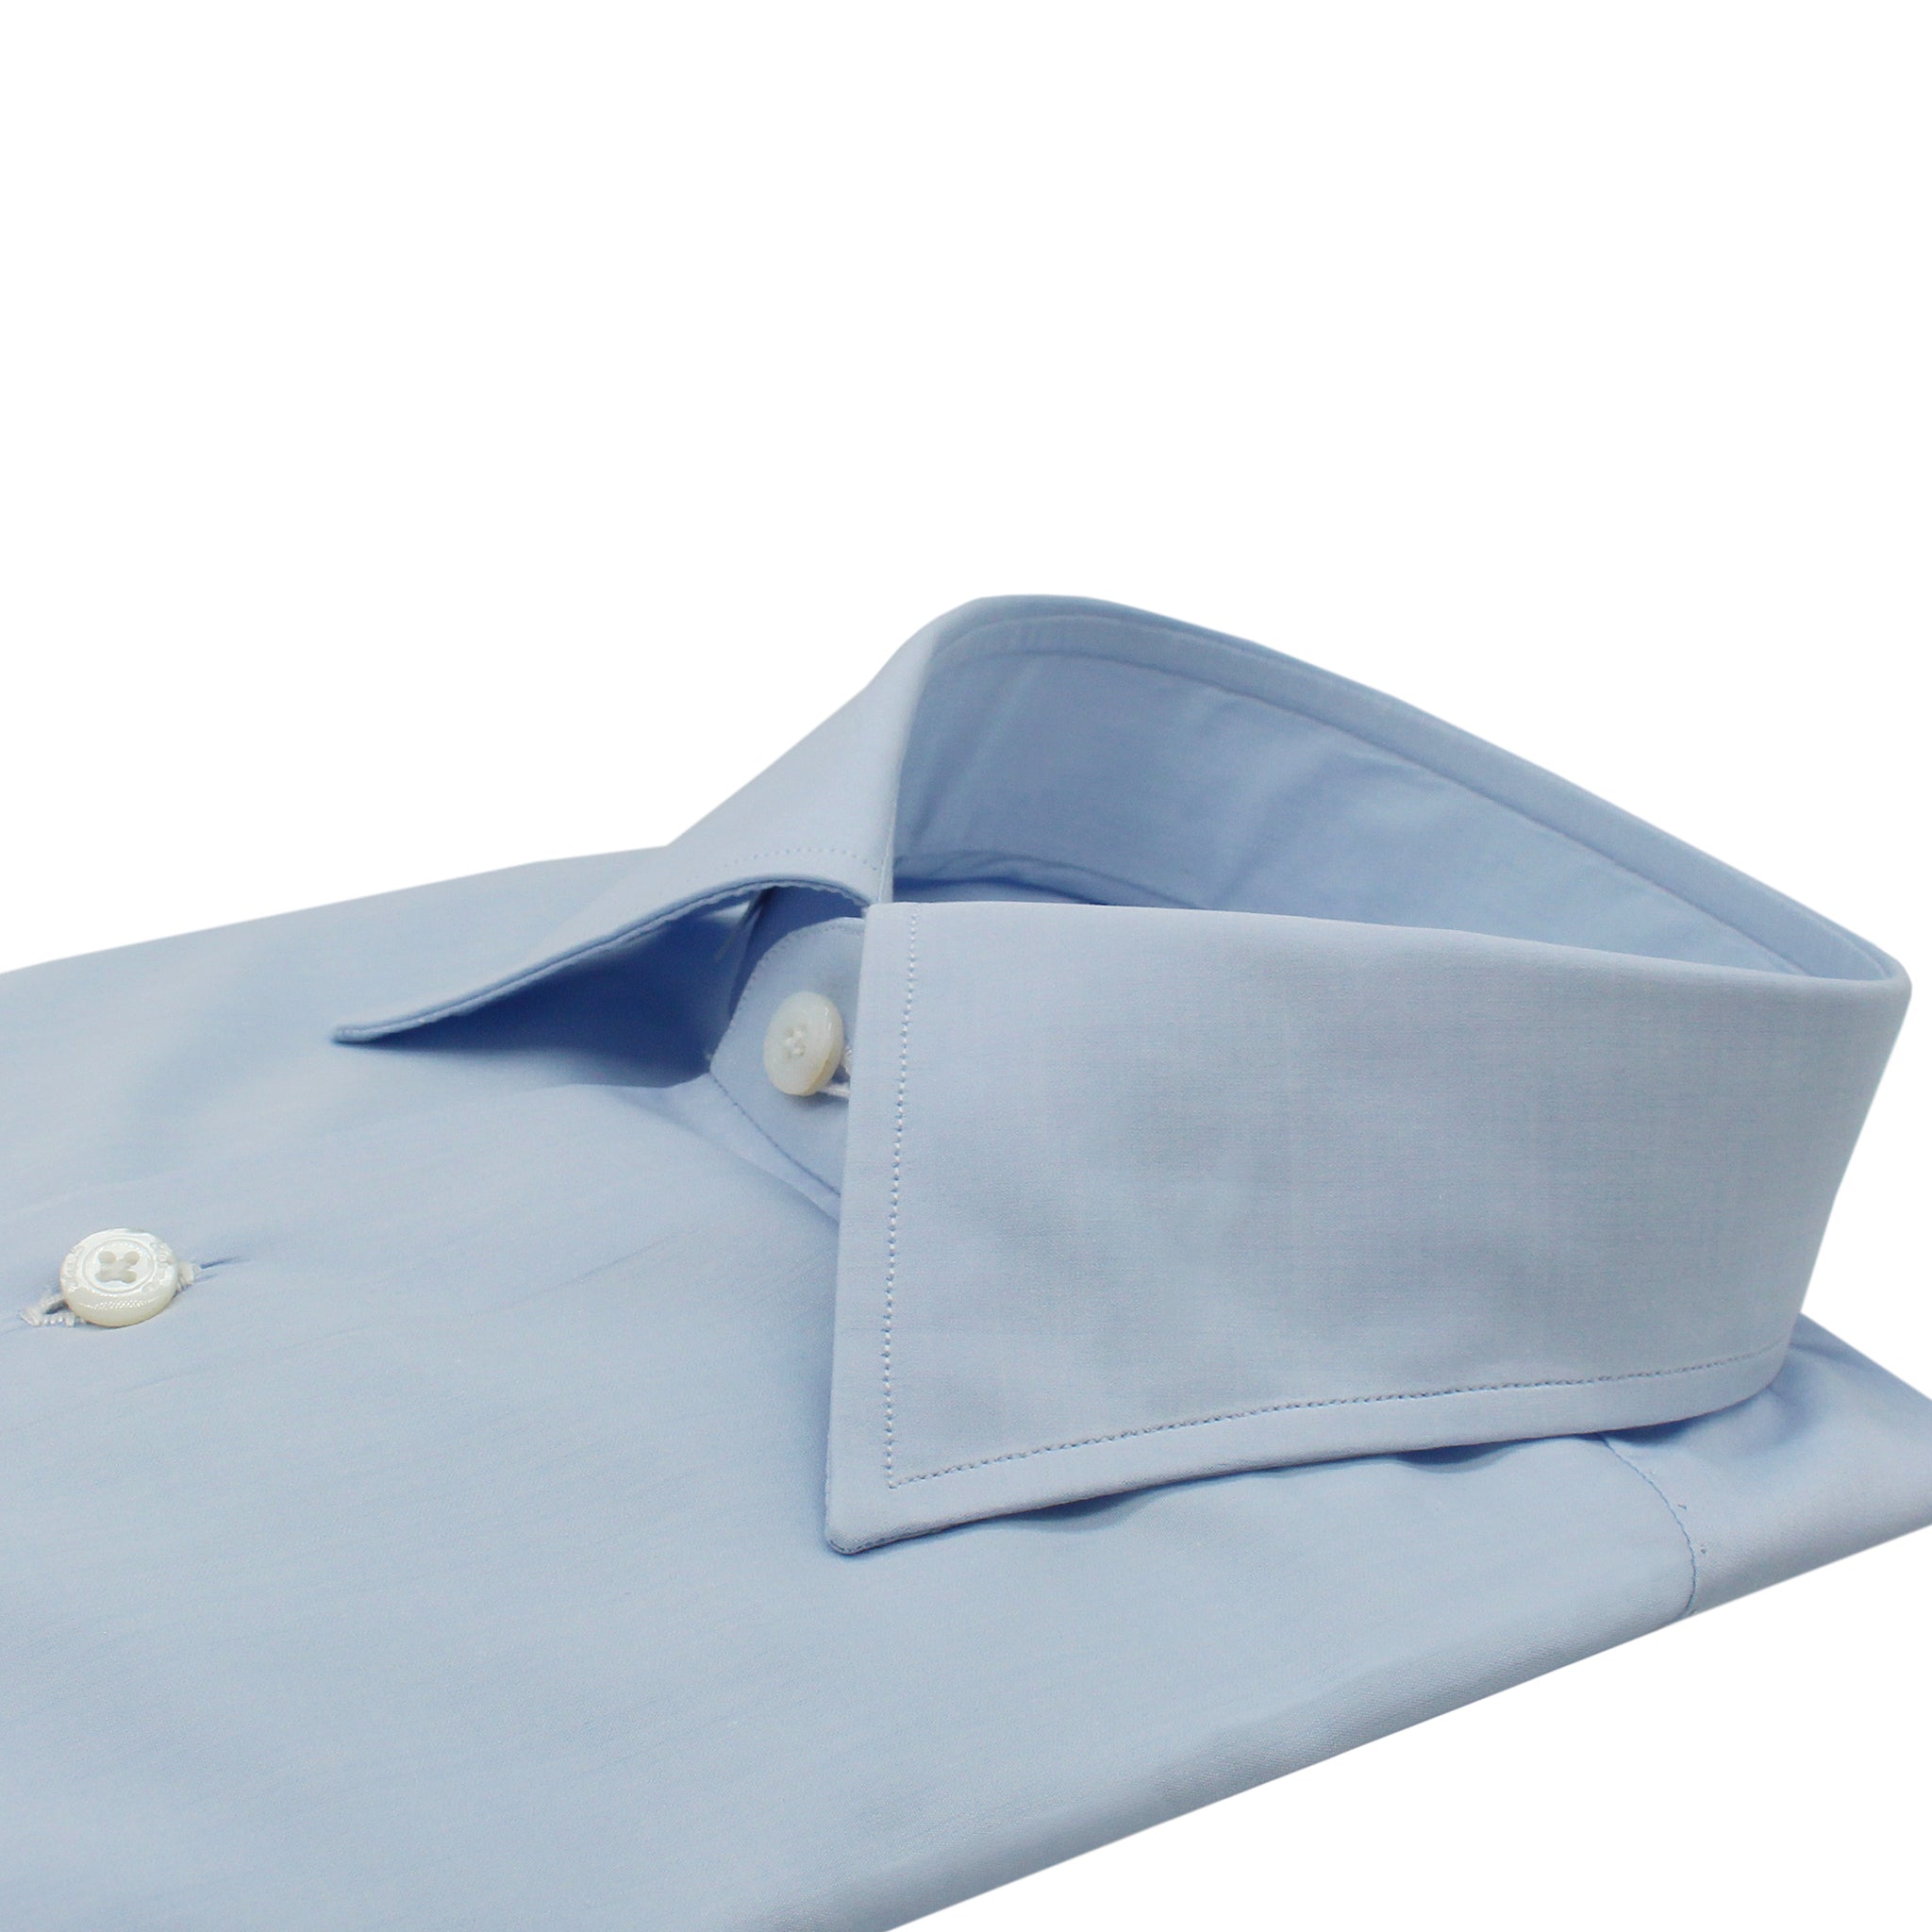 Classic 170 a due cotton Giza 45 white or light blue shirt